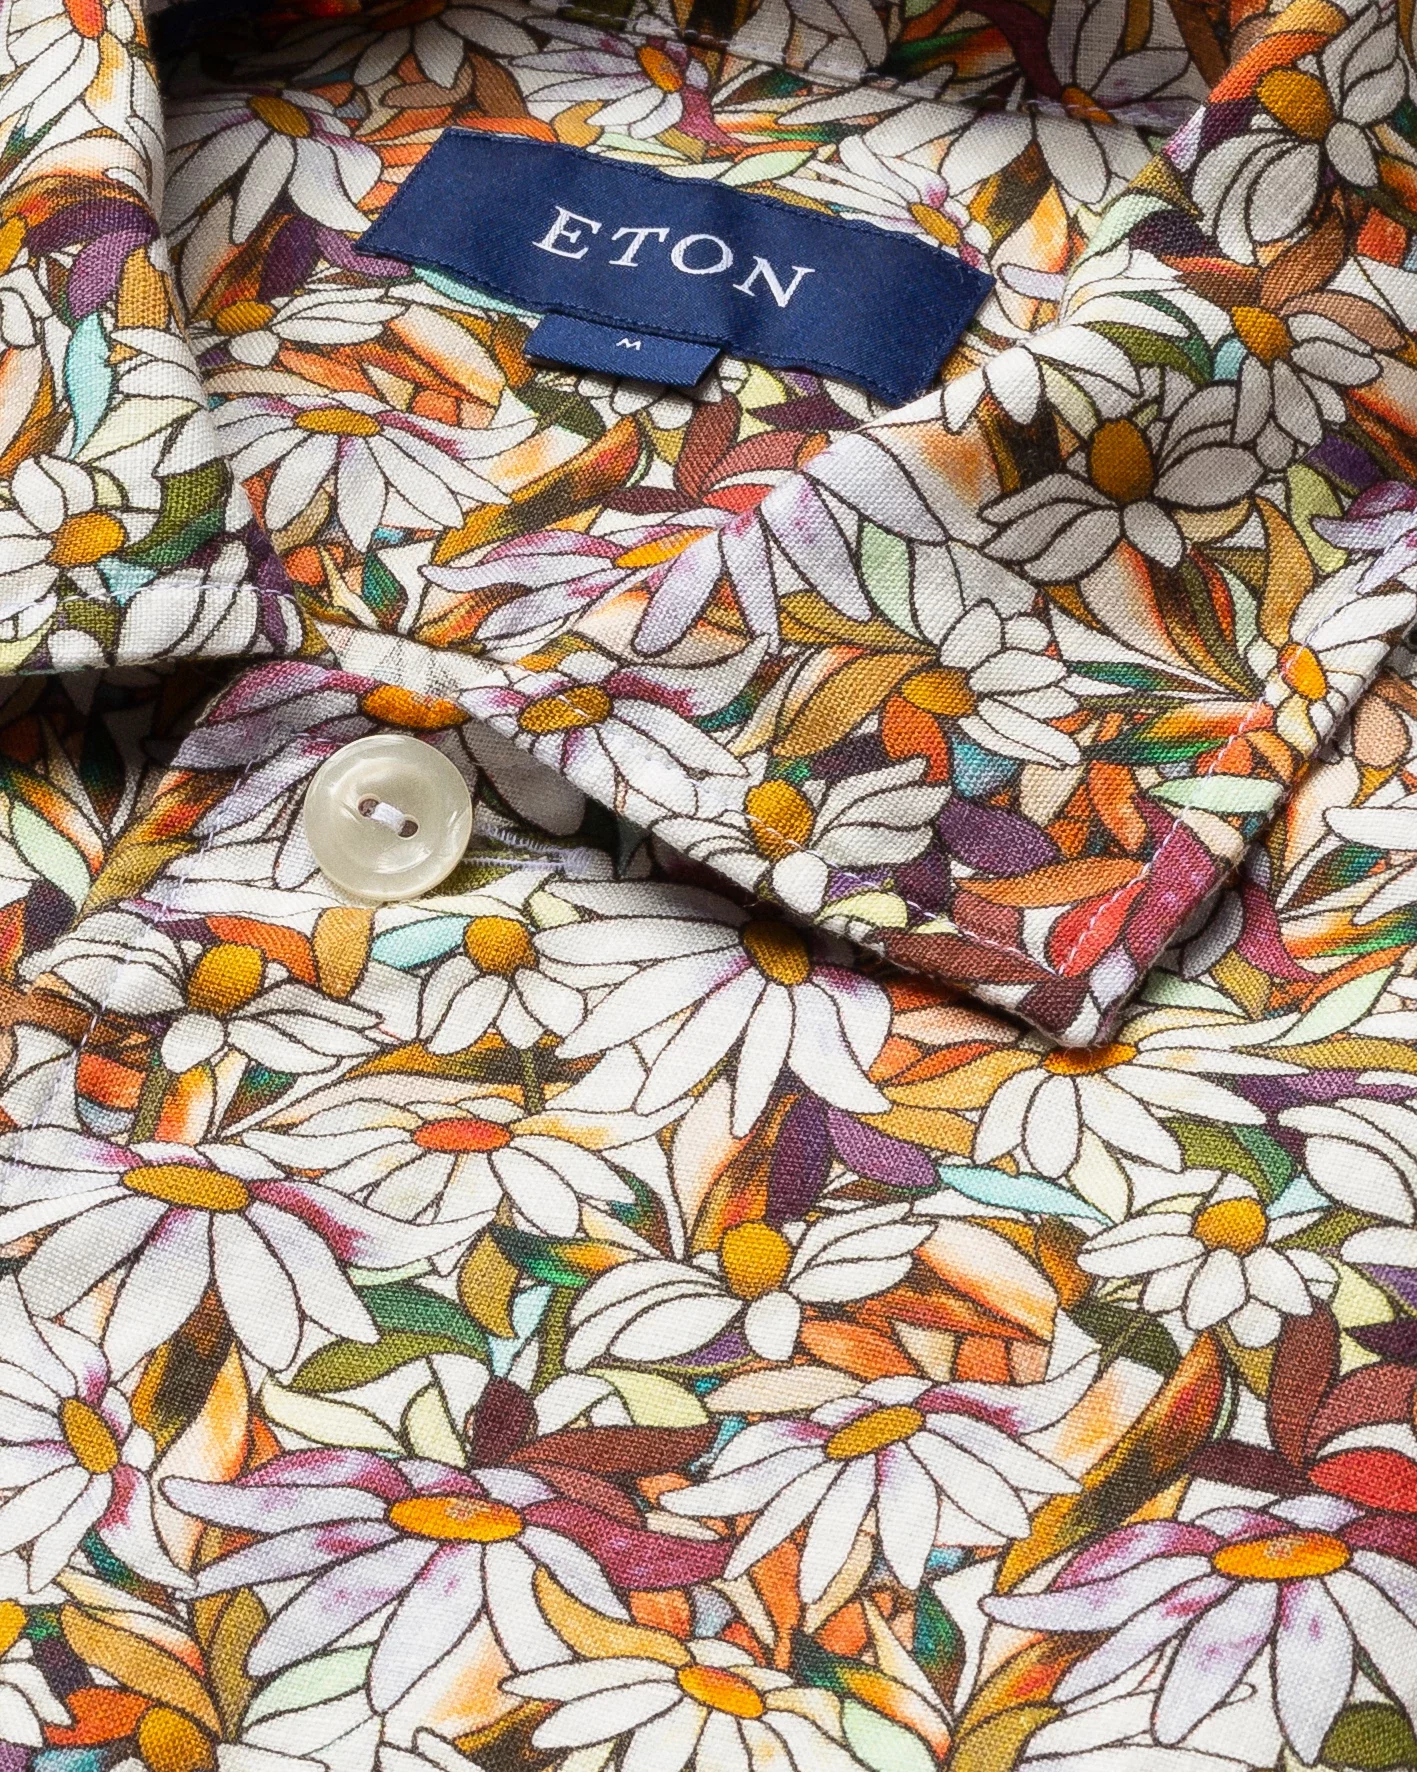 Eton - orange floral print linen shirt resort short sleeve boxfit box fit